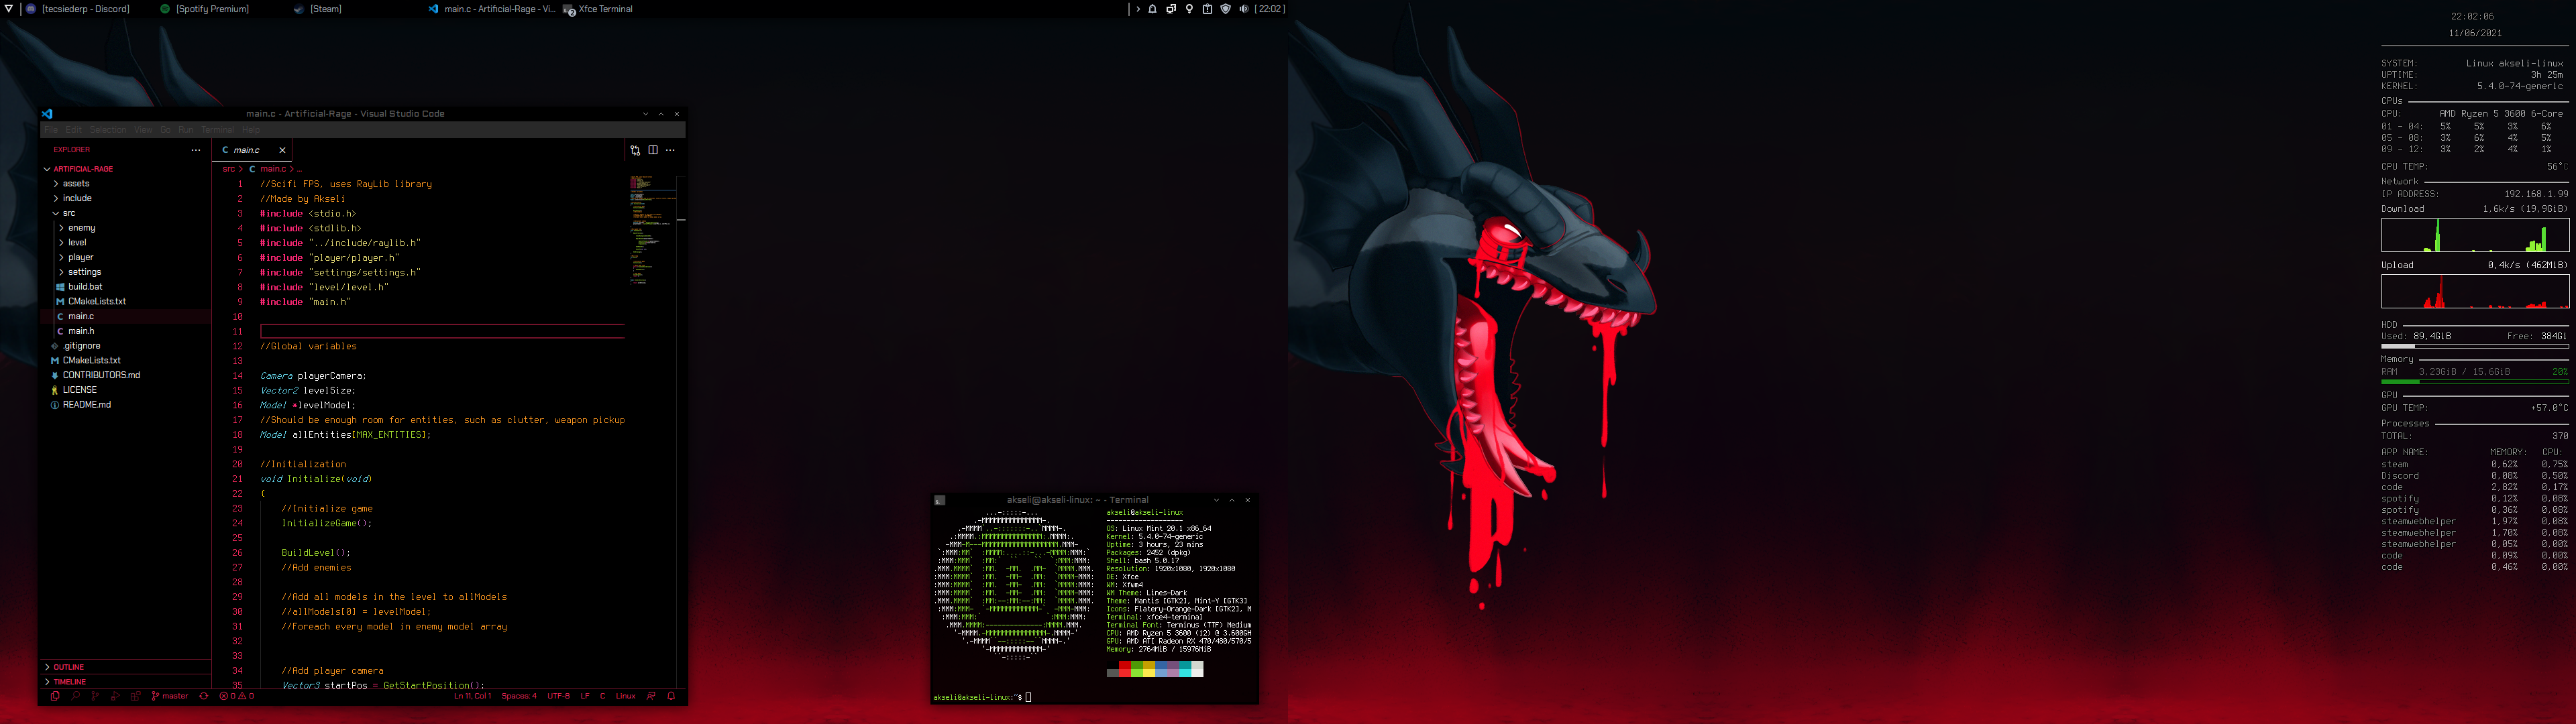 My Linux desktop